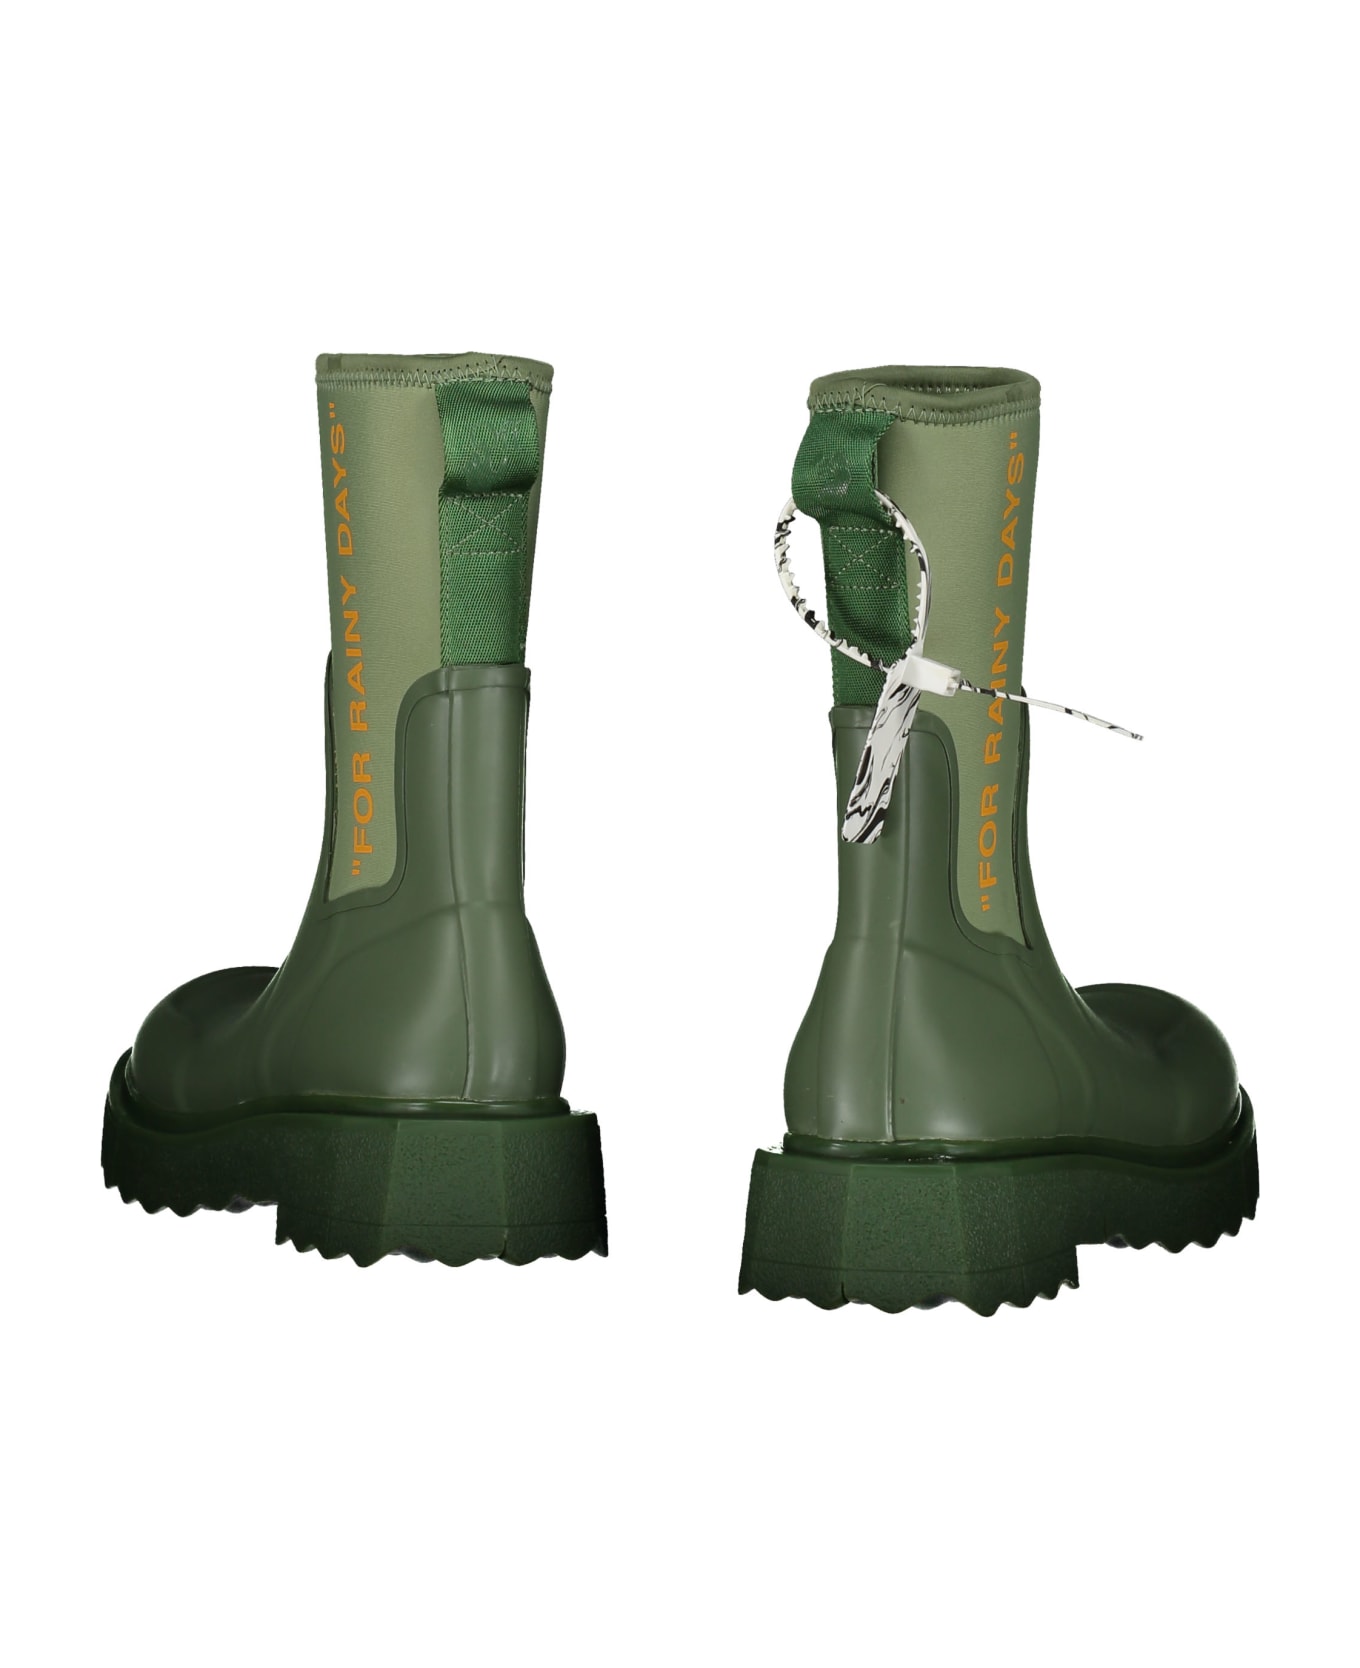 Off-White Rubber And Neoprene Rain Boots - green ブーツ